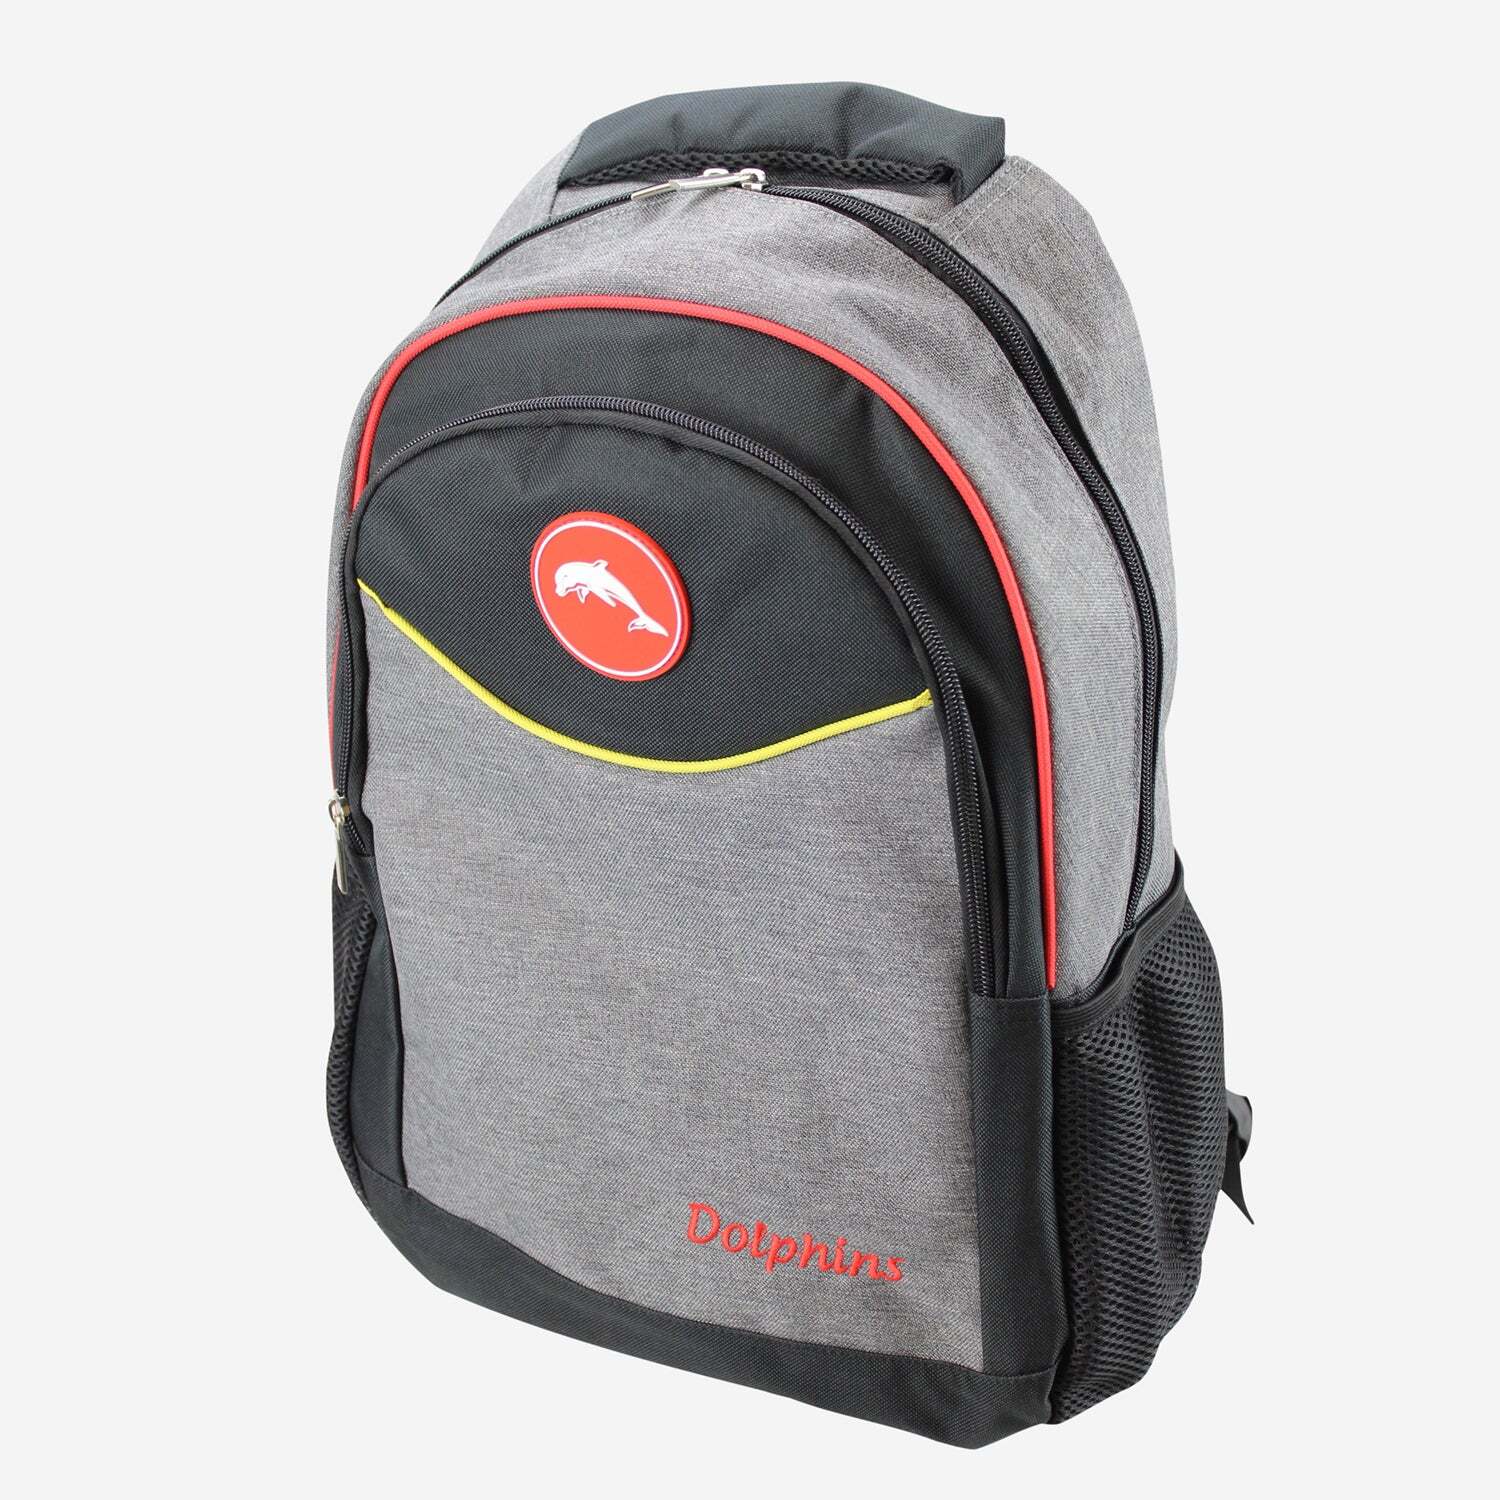 Dolphins NRL Stealth Backpack Travel Training School Bag!